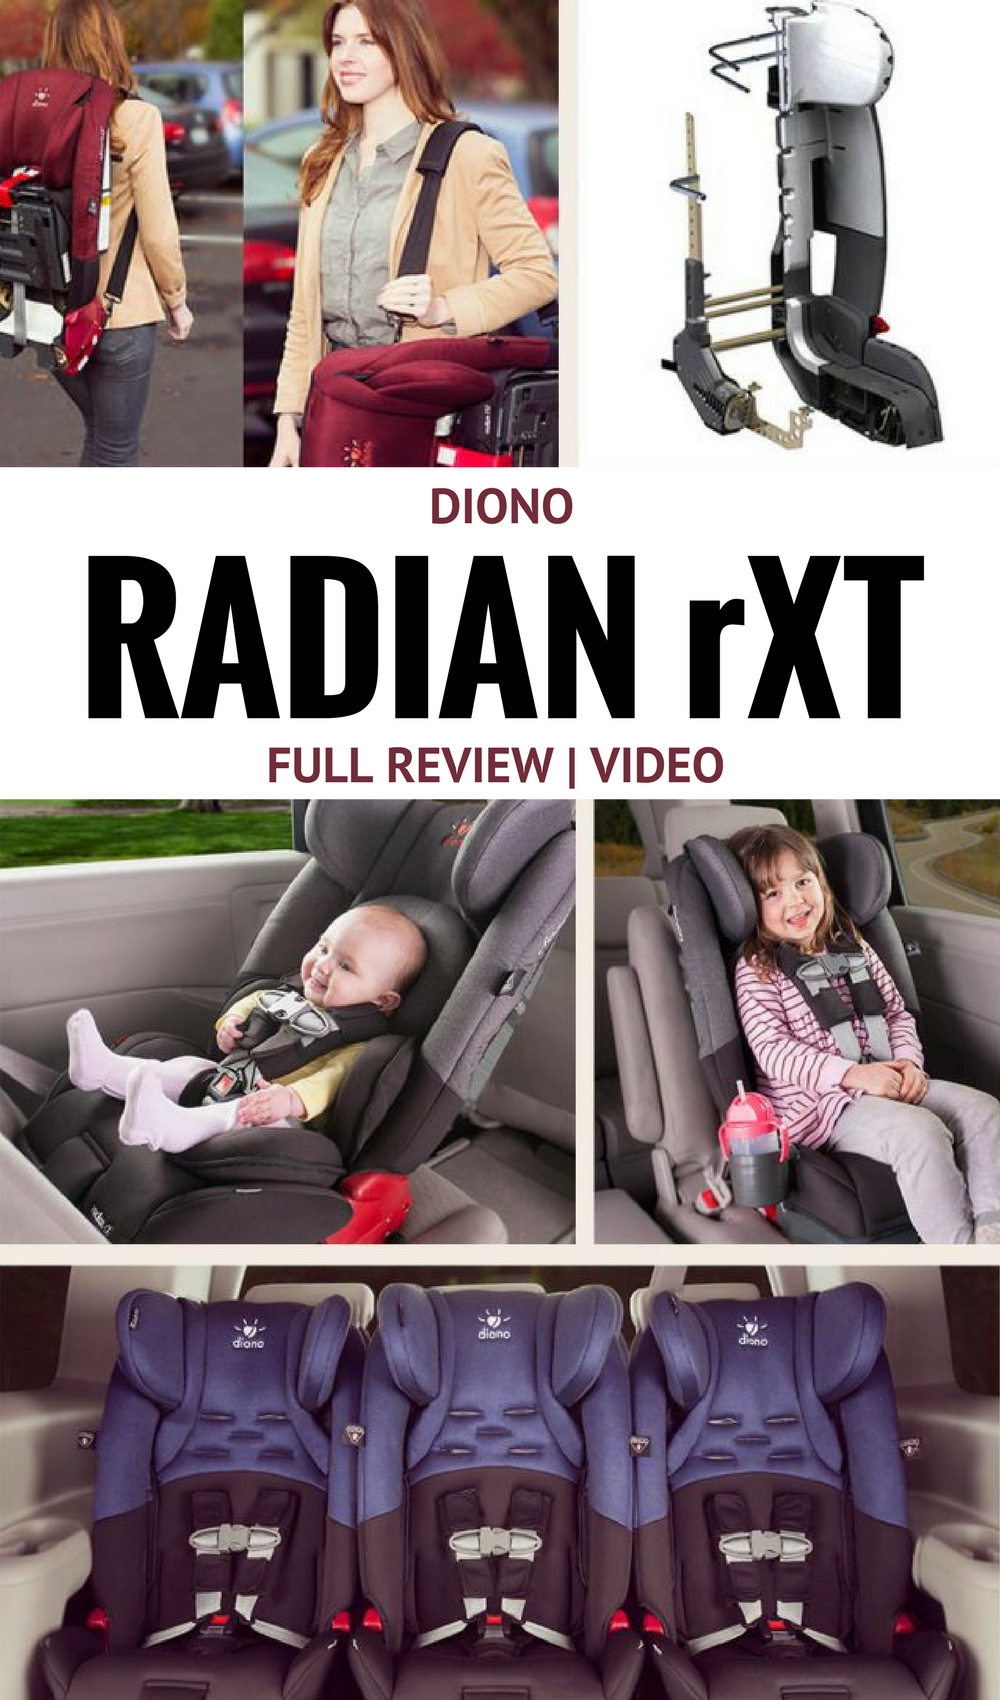 Diono Radian rxt, Diono radian rxt review, 2017 Diogo radian rxt, Diogo radian 2017 review